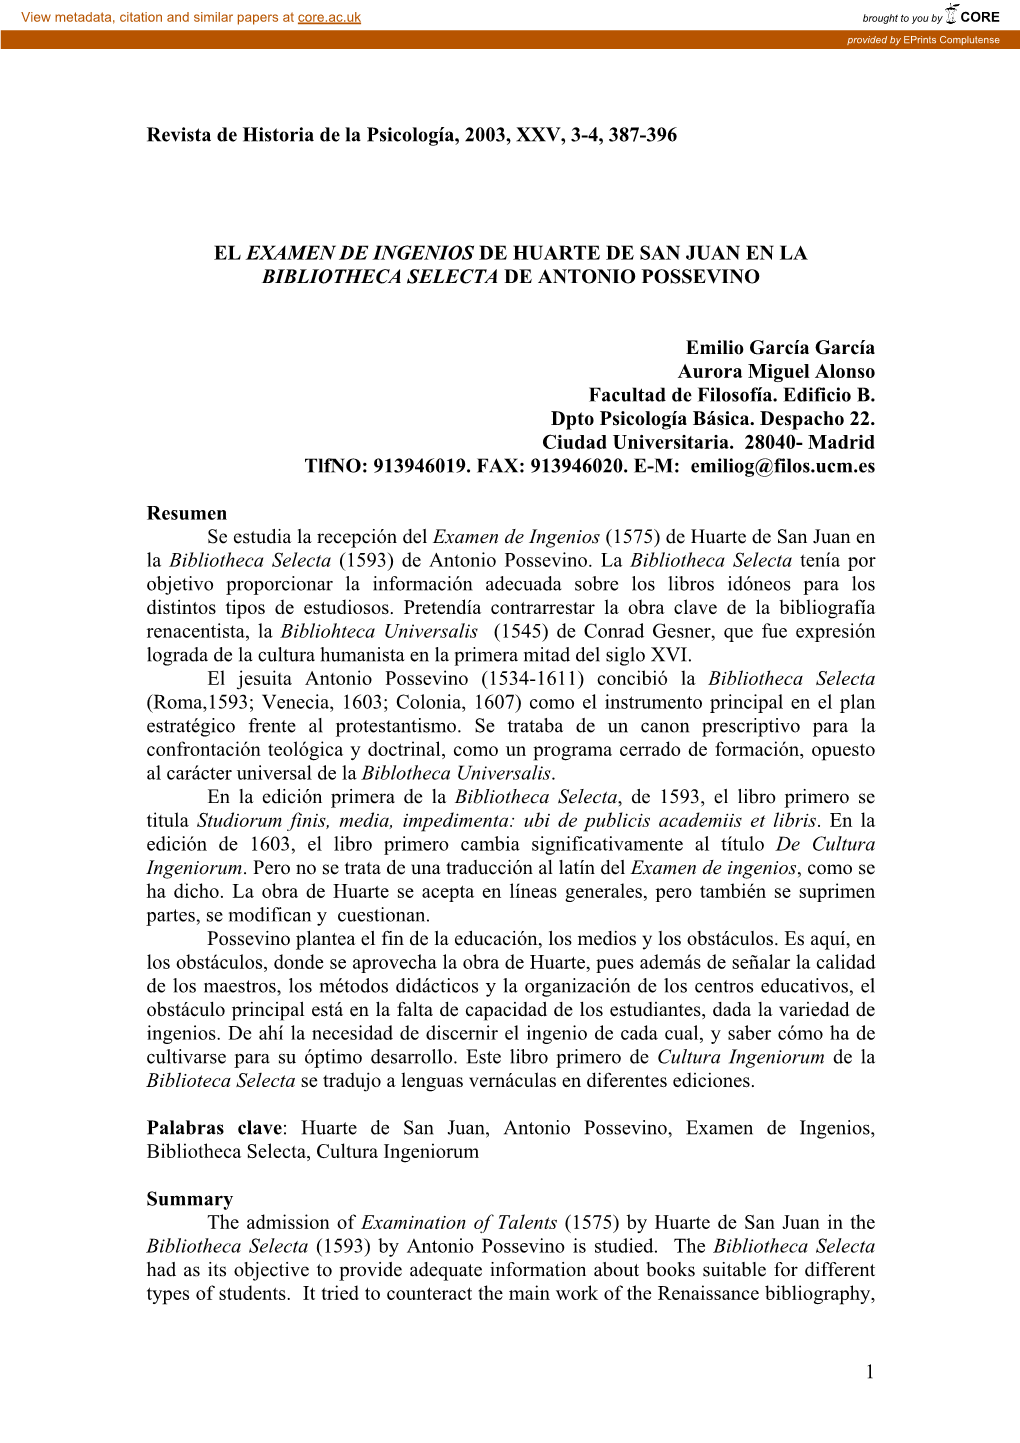 El Examen De Ingenios De Huarte De San Juan En La Bibliotheca Selecta De Antonio Possevino